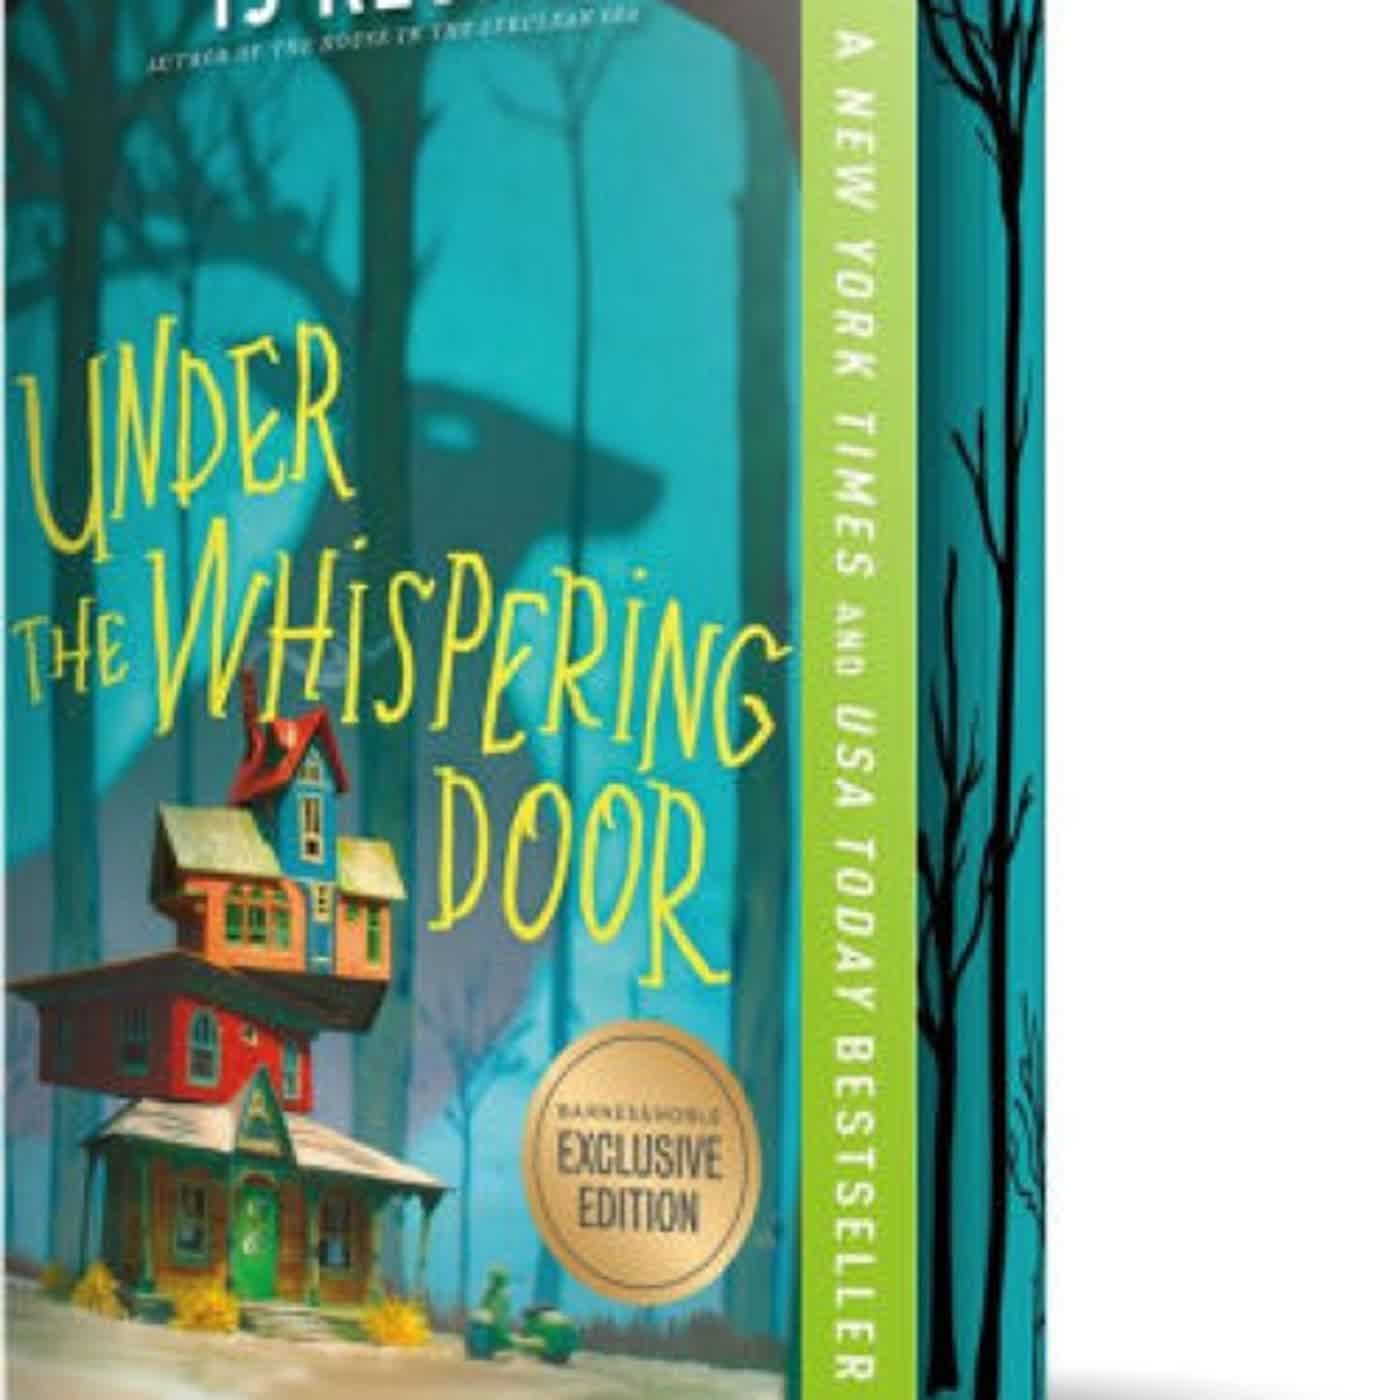 [Pdf/ePub] Under the Whispering Door by TJ Klune download ebook